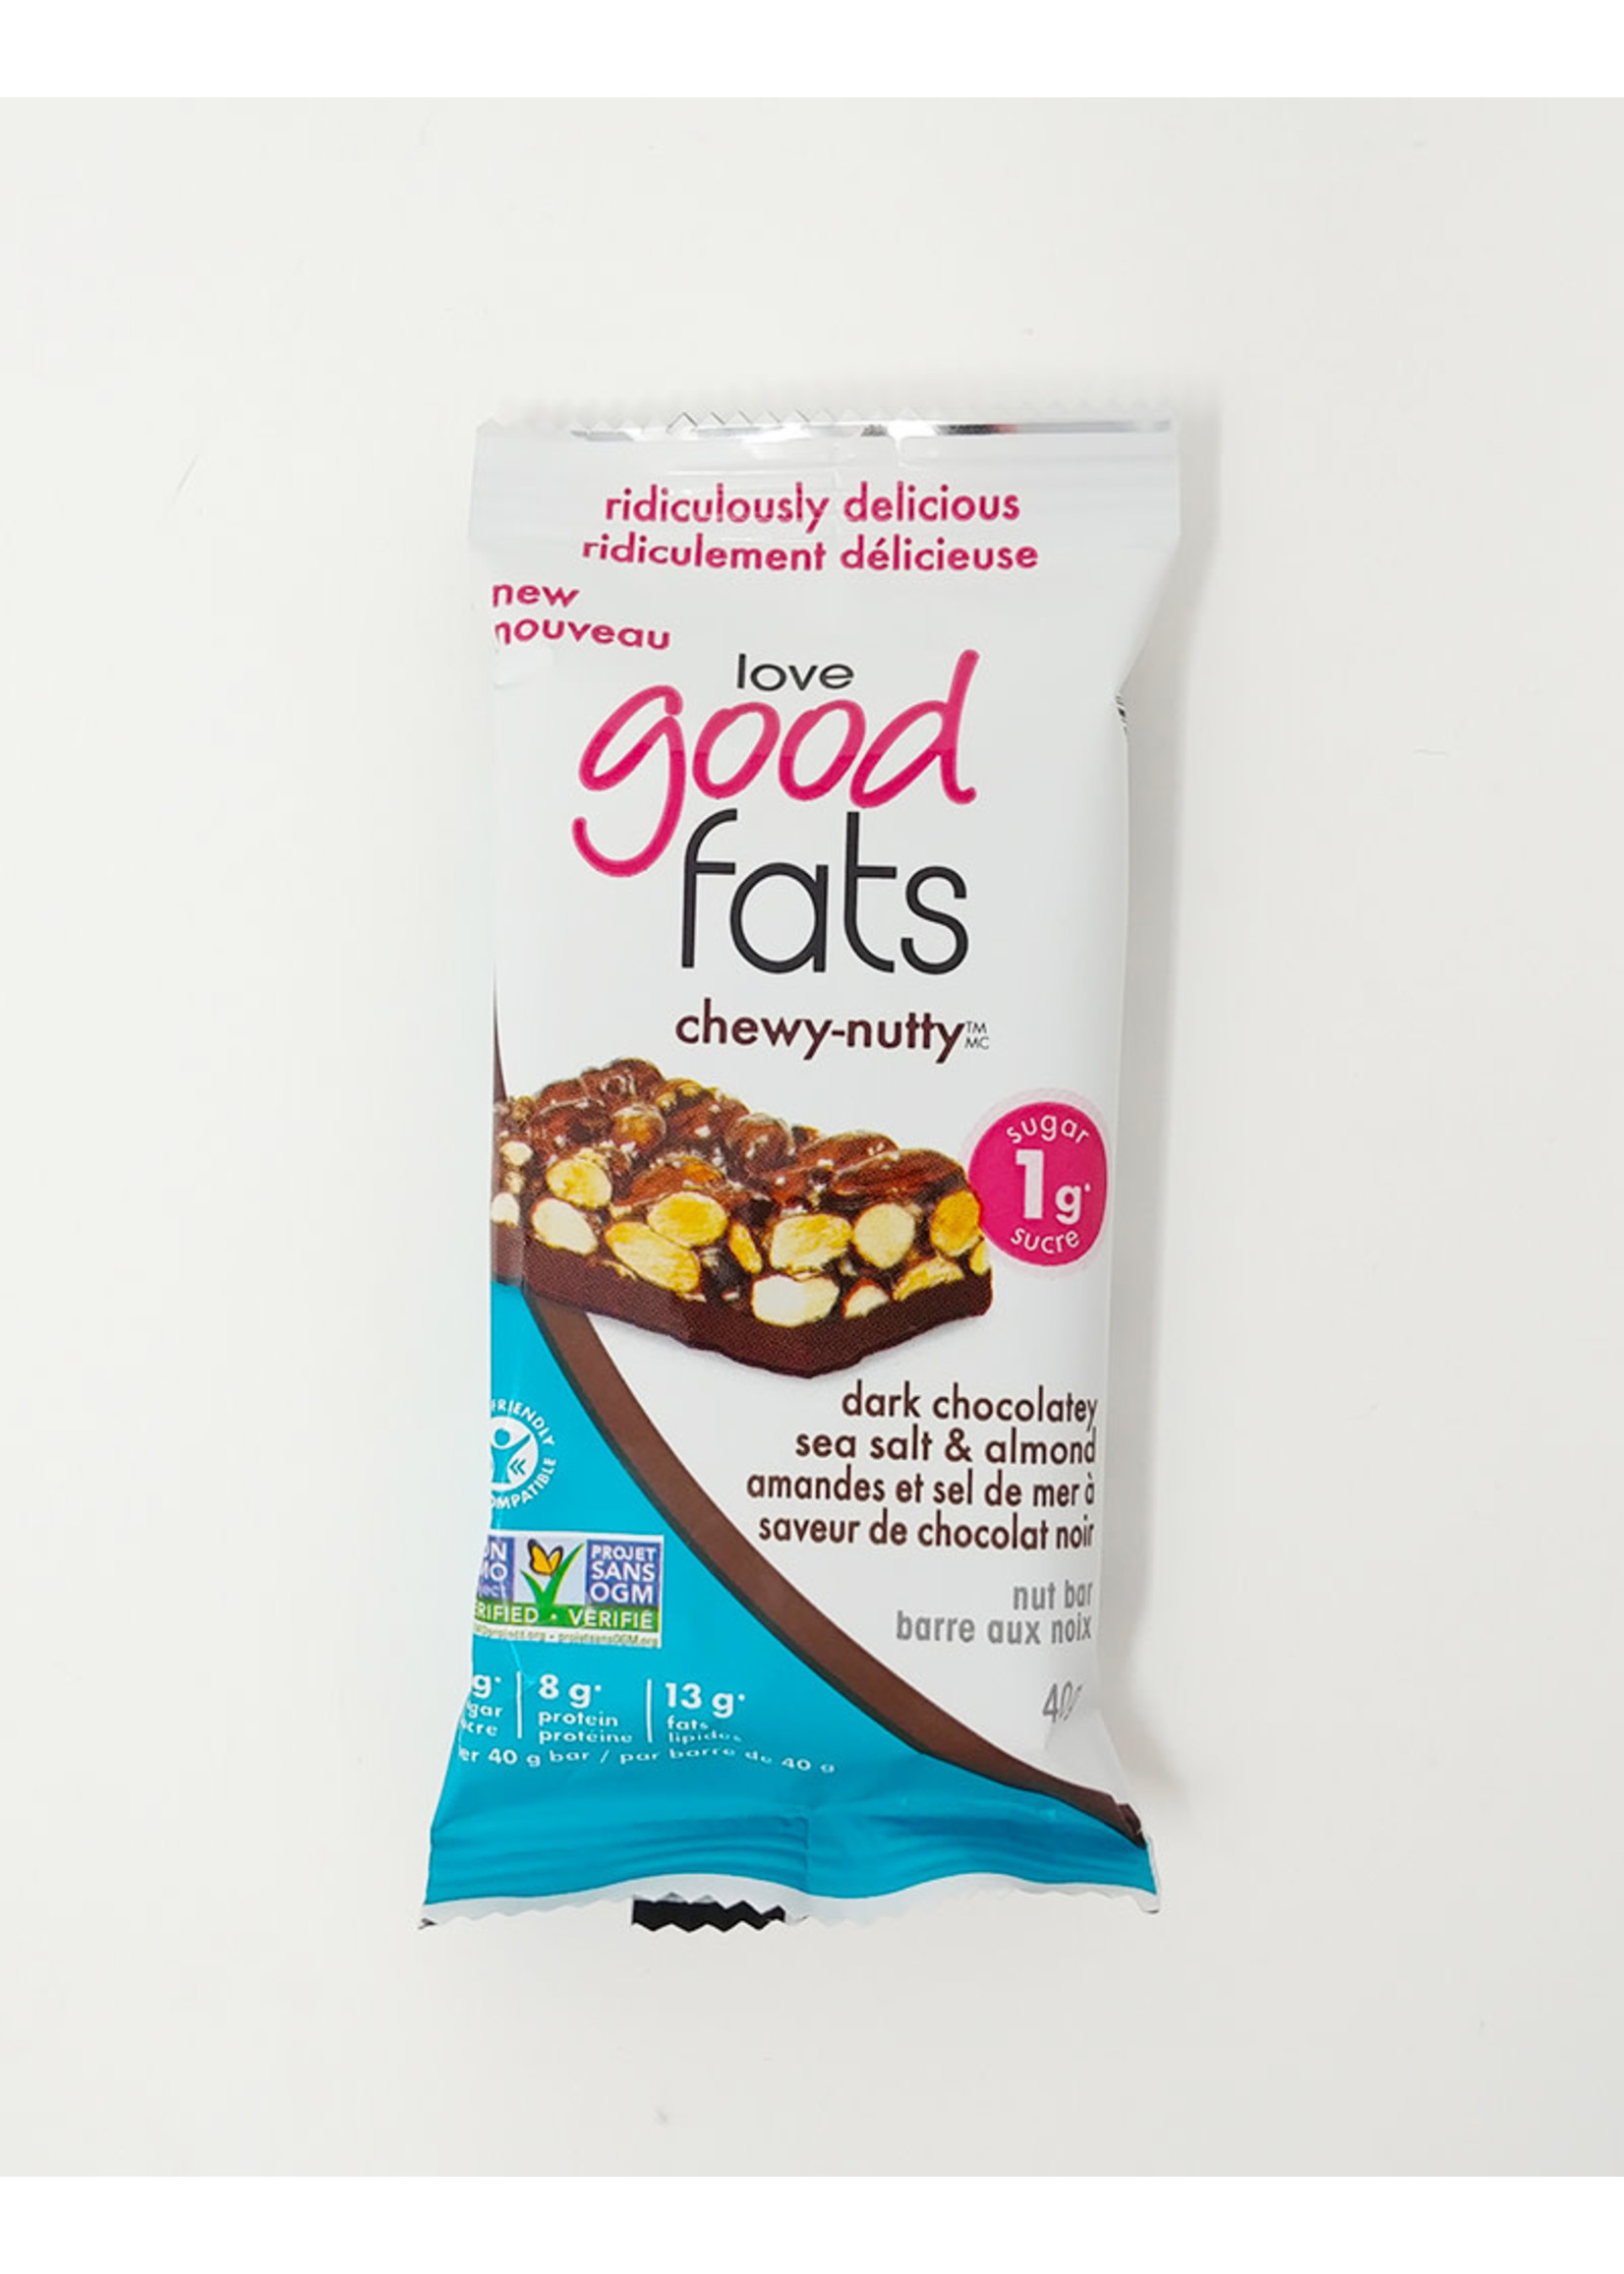 Love Good Fats Love Good Fats - Chewy-Nutty, Dark Chocolatey Sea Salt (40g)